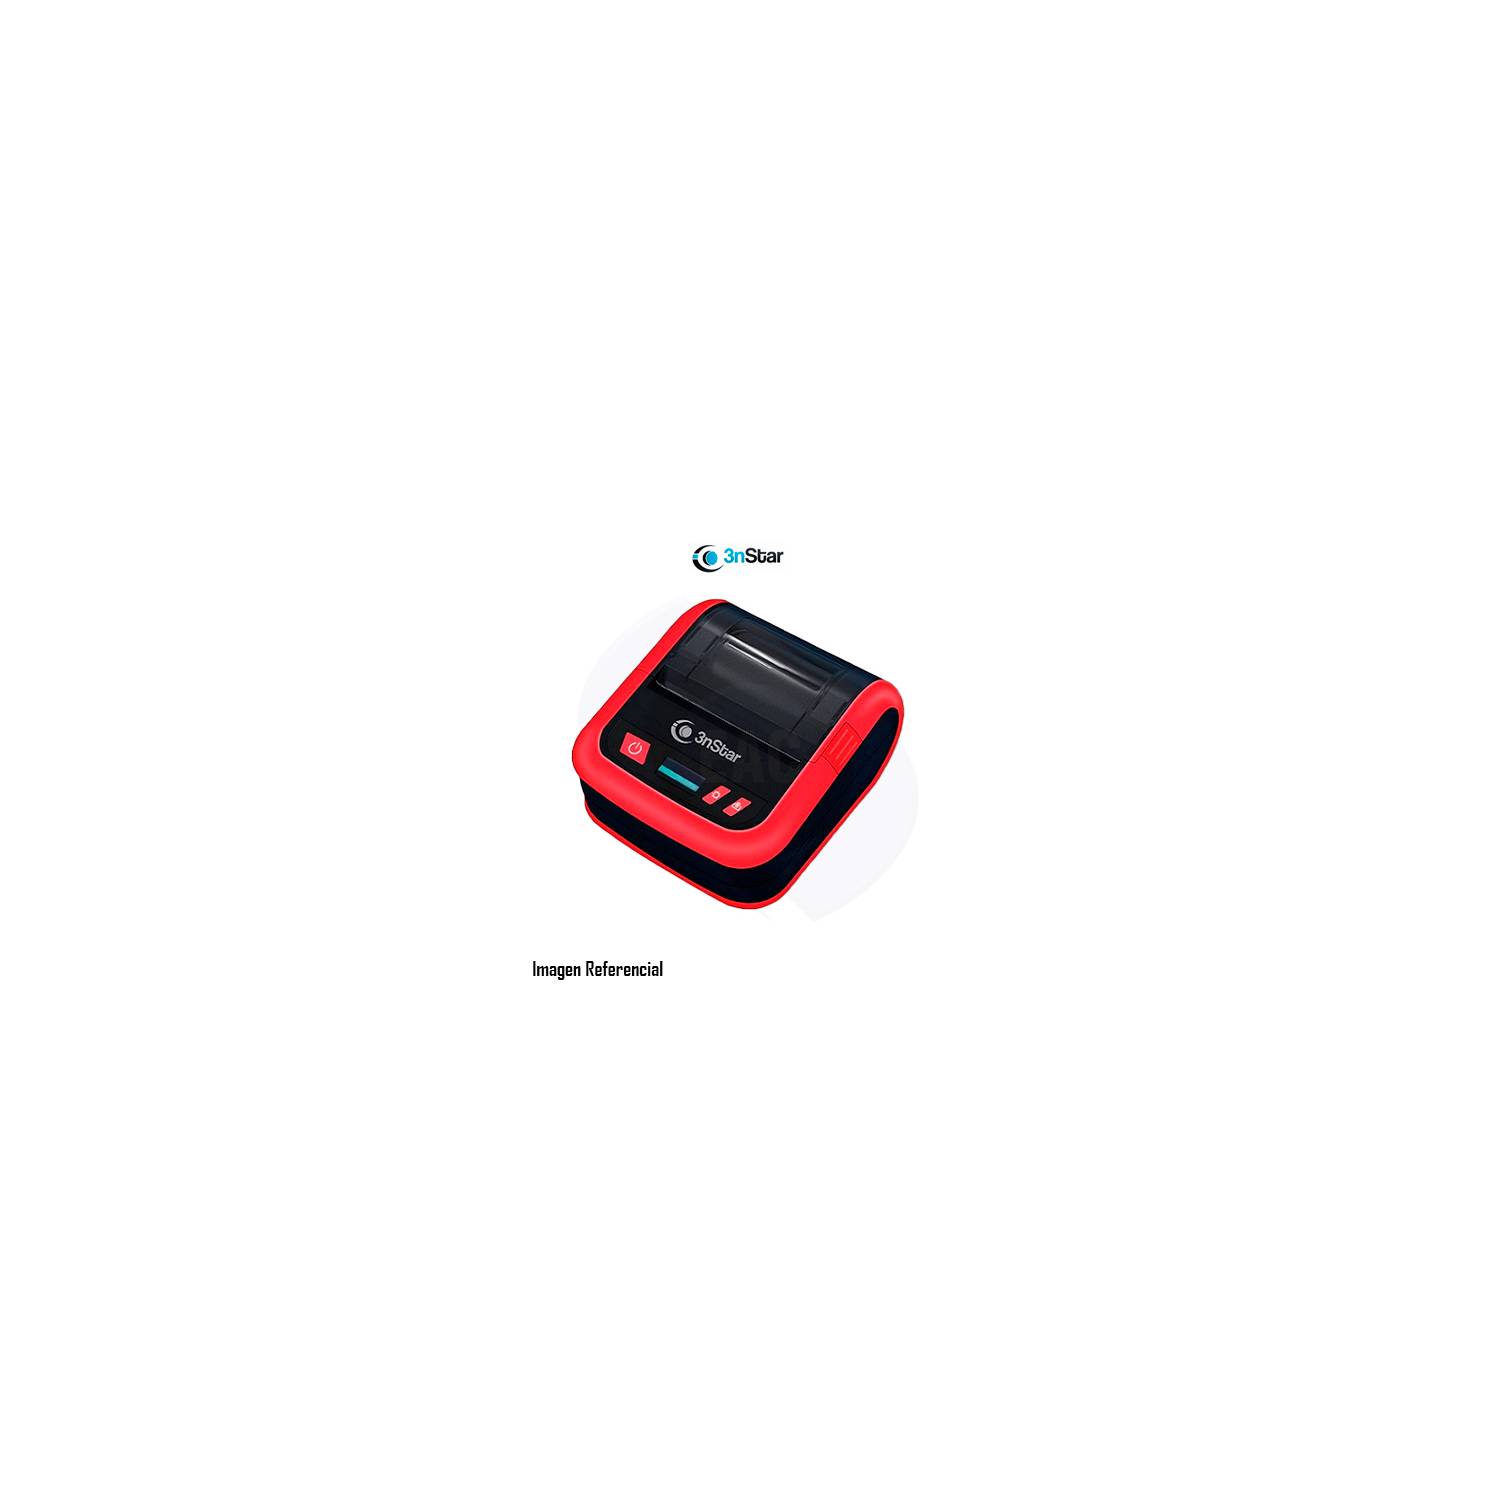 Impresora Móvil de Recibos 3nStar Bluetooth 3